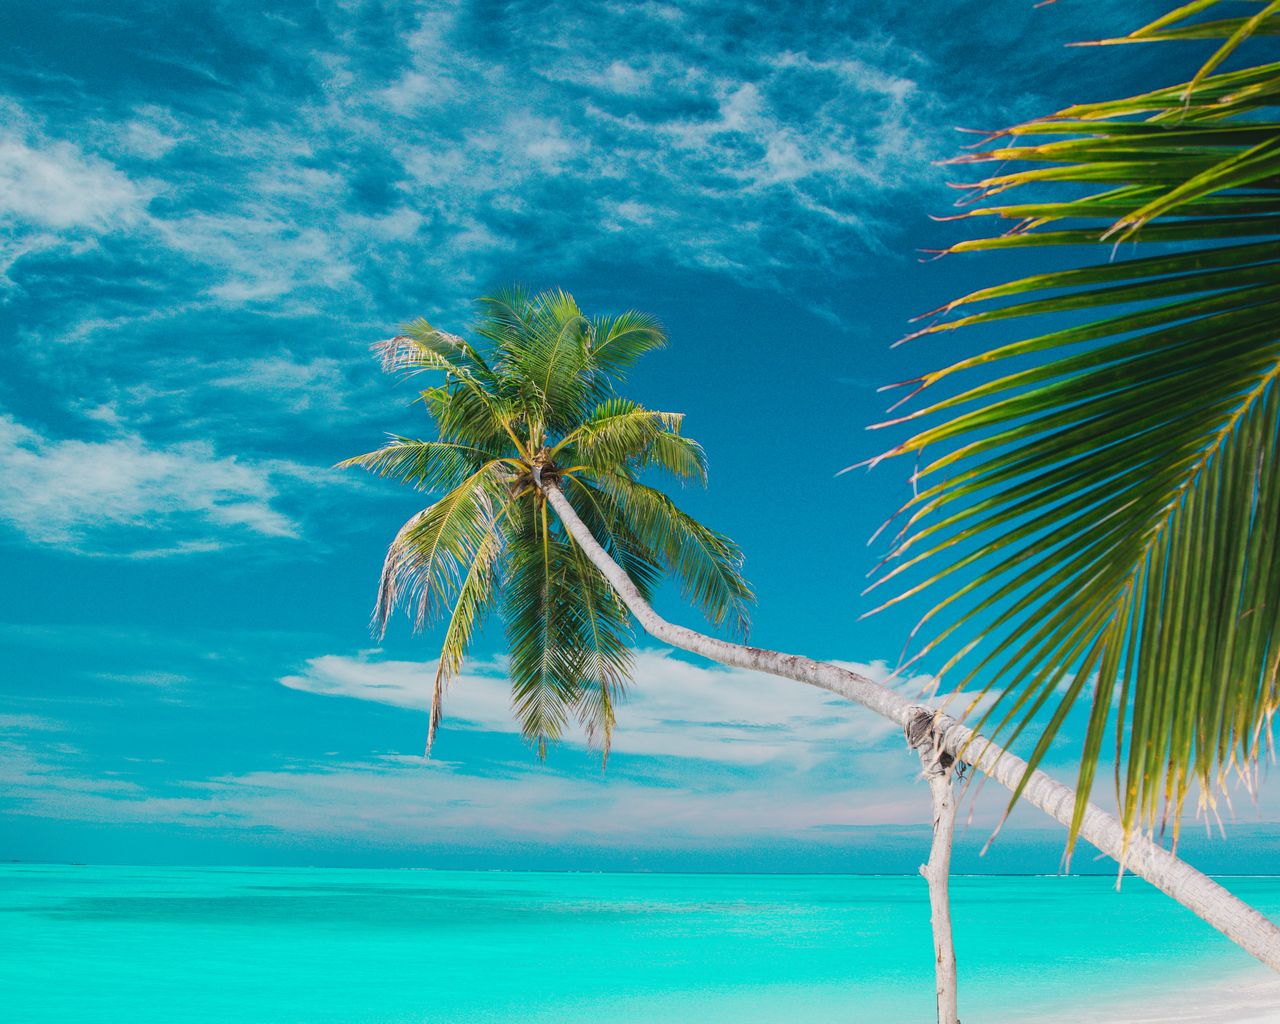 Download wallpaper x beach sea palm trees summer tropics standard hd background